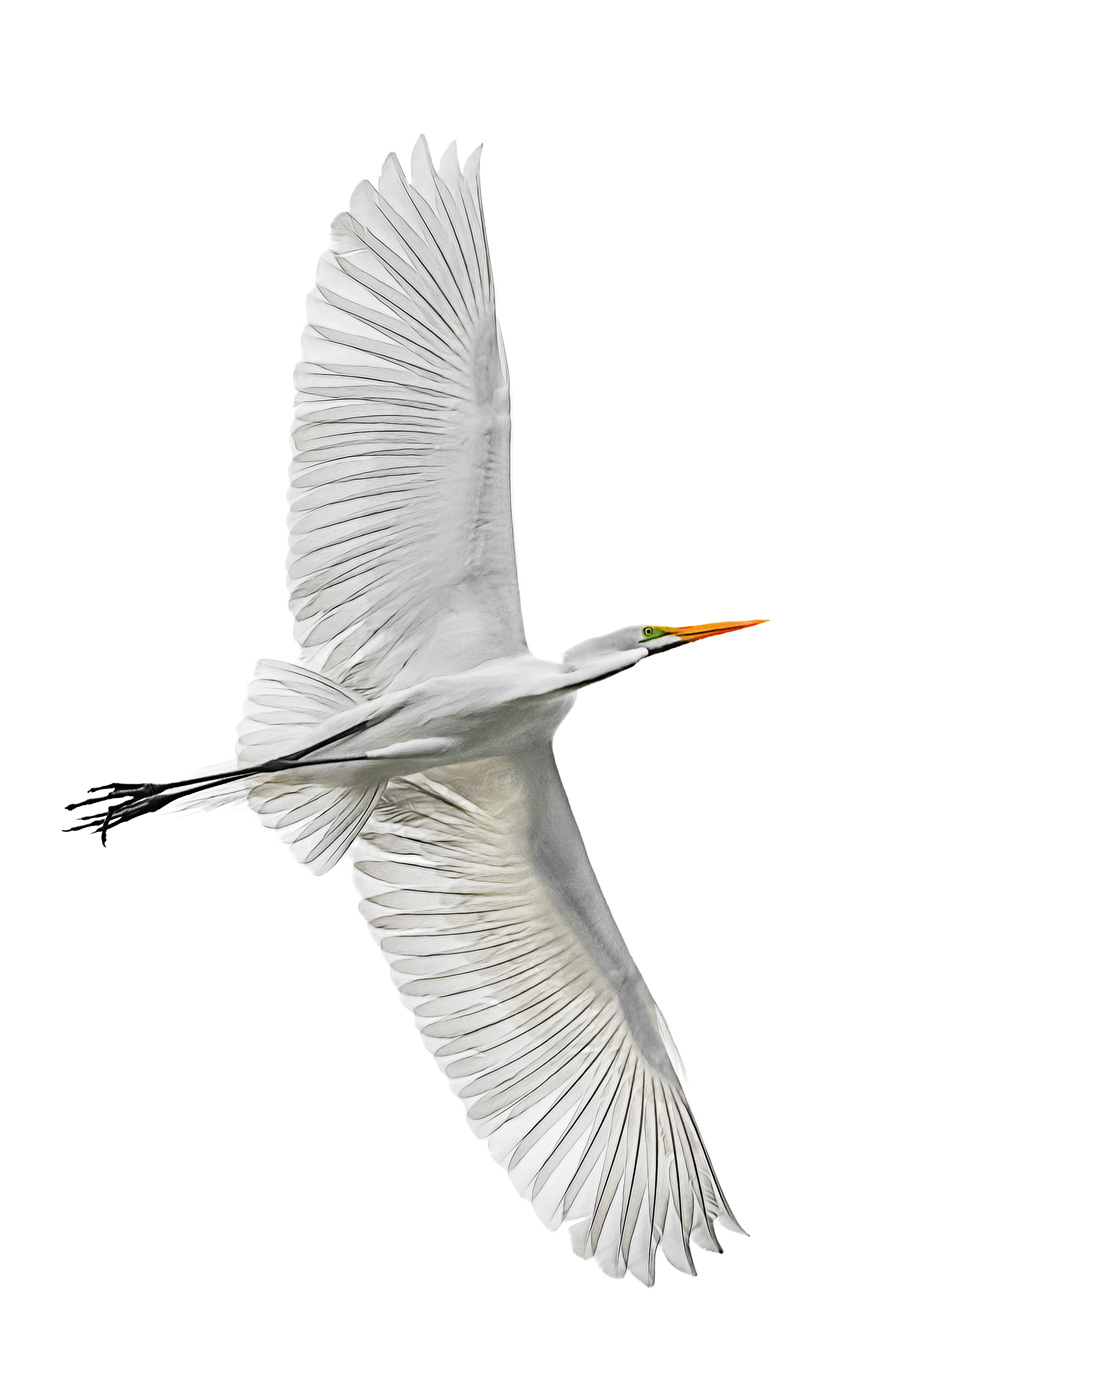 Egret in Flight by Lisa Cuchara